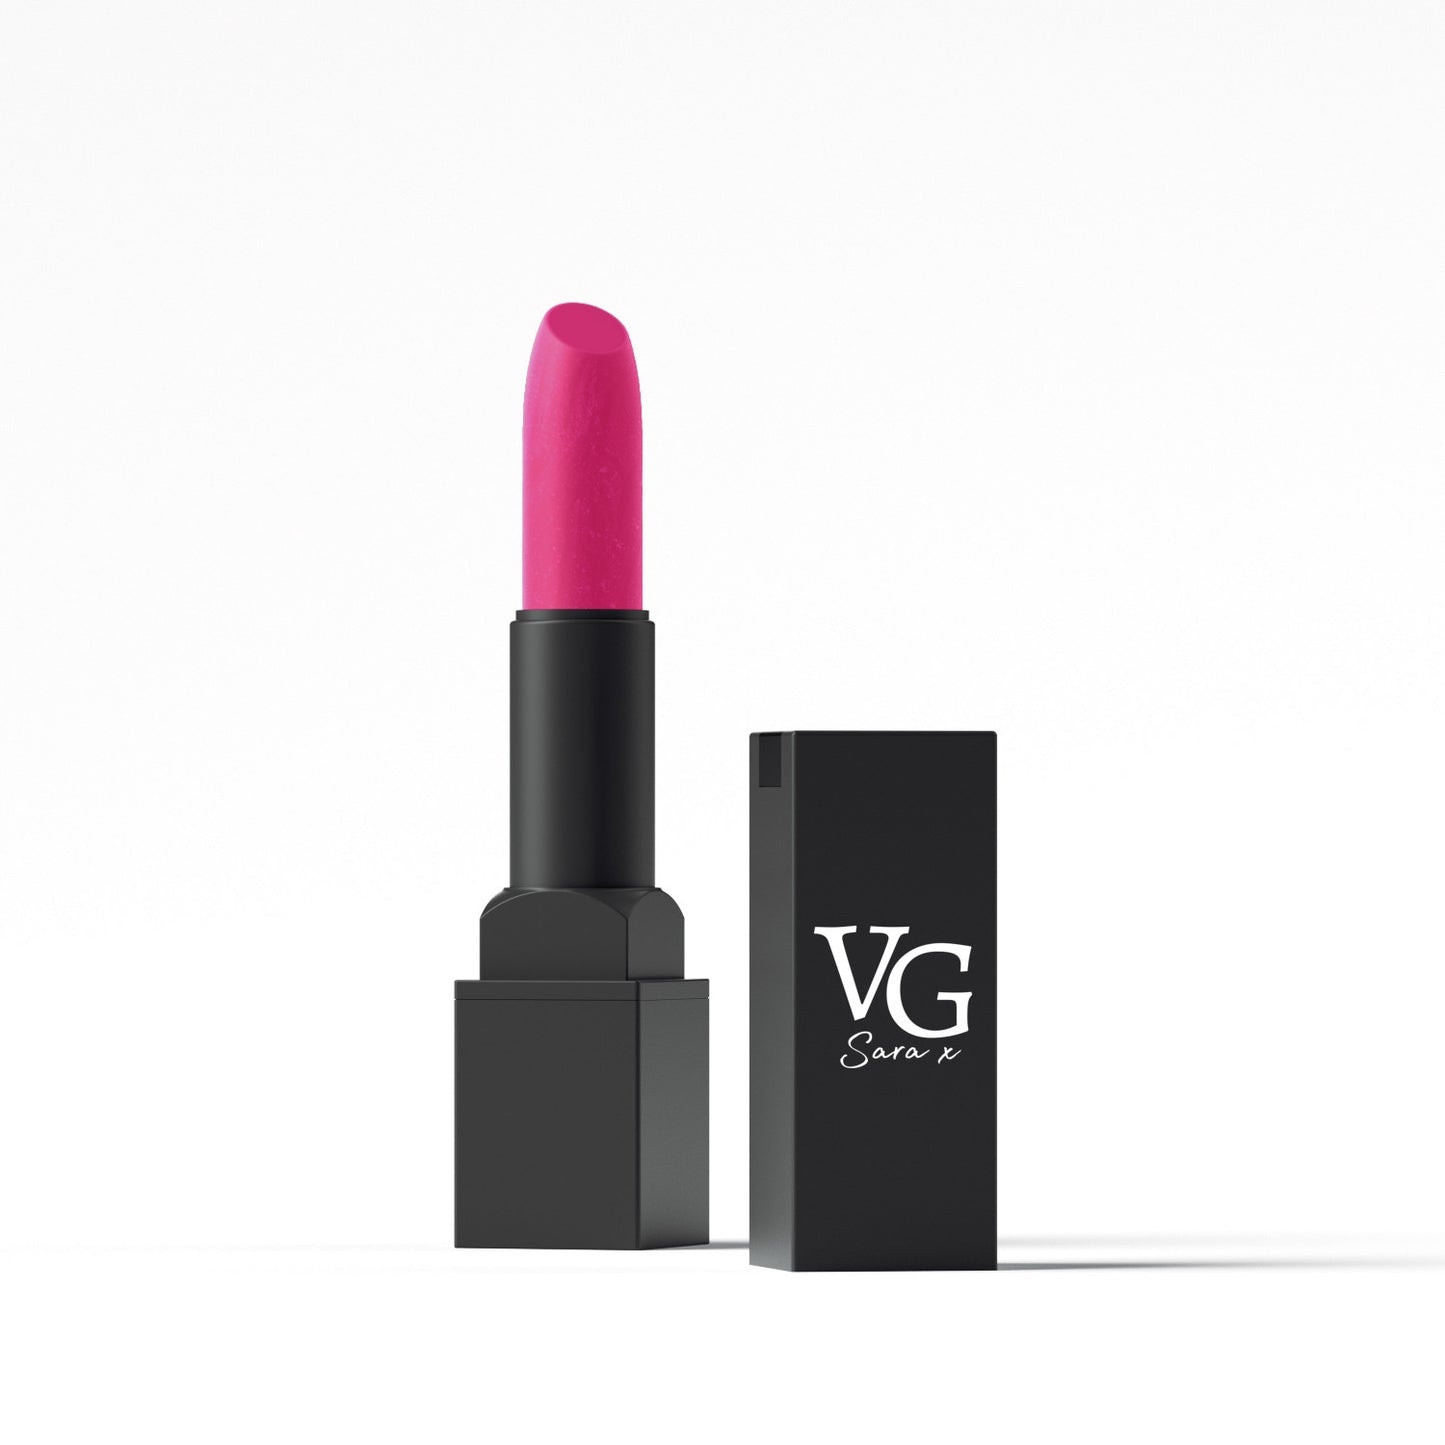 VG's pink shade lipstick with black box emphasizing  Vg logo